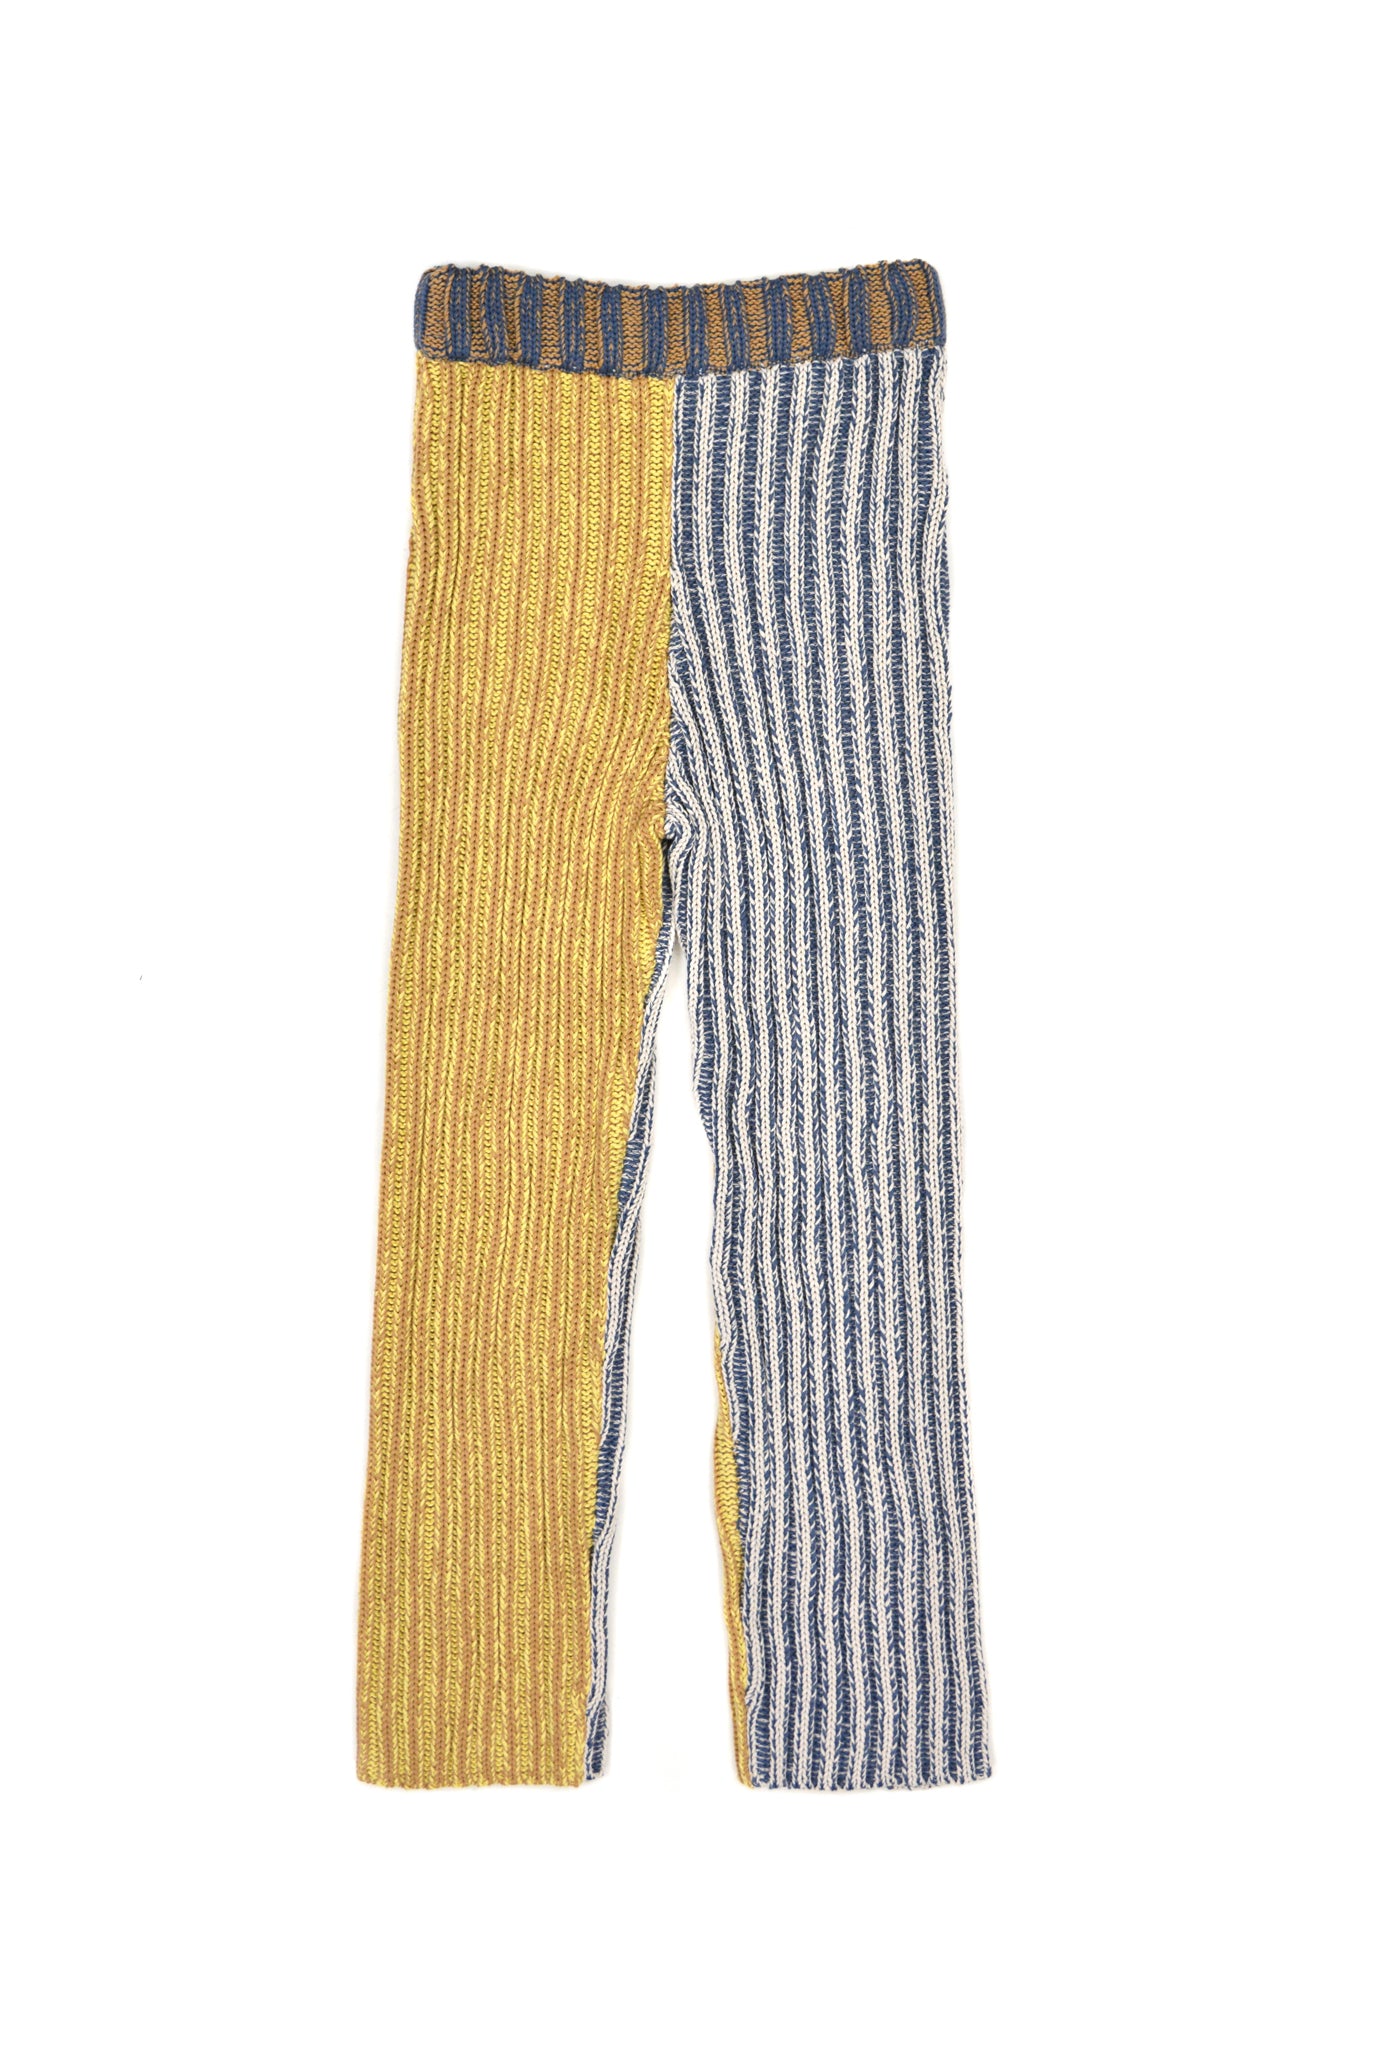 Eckhaus Latta Two-Tone Knit Pant